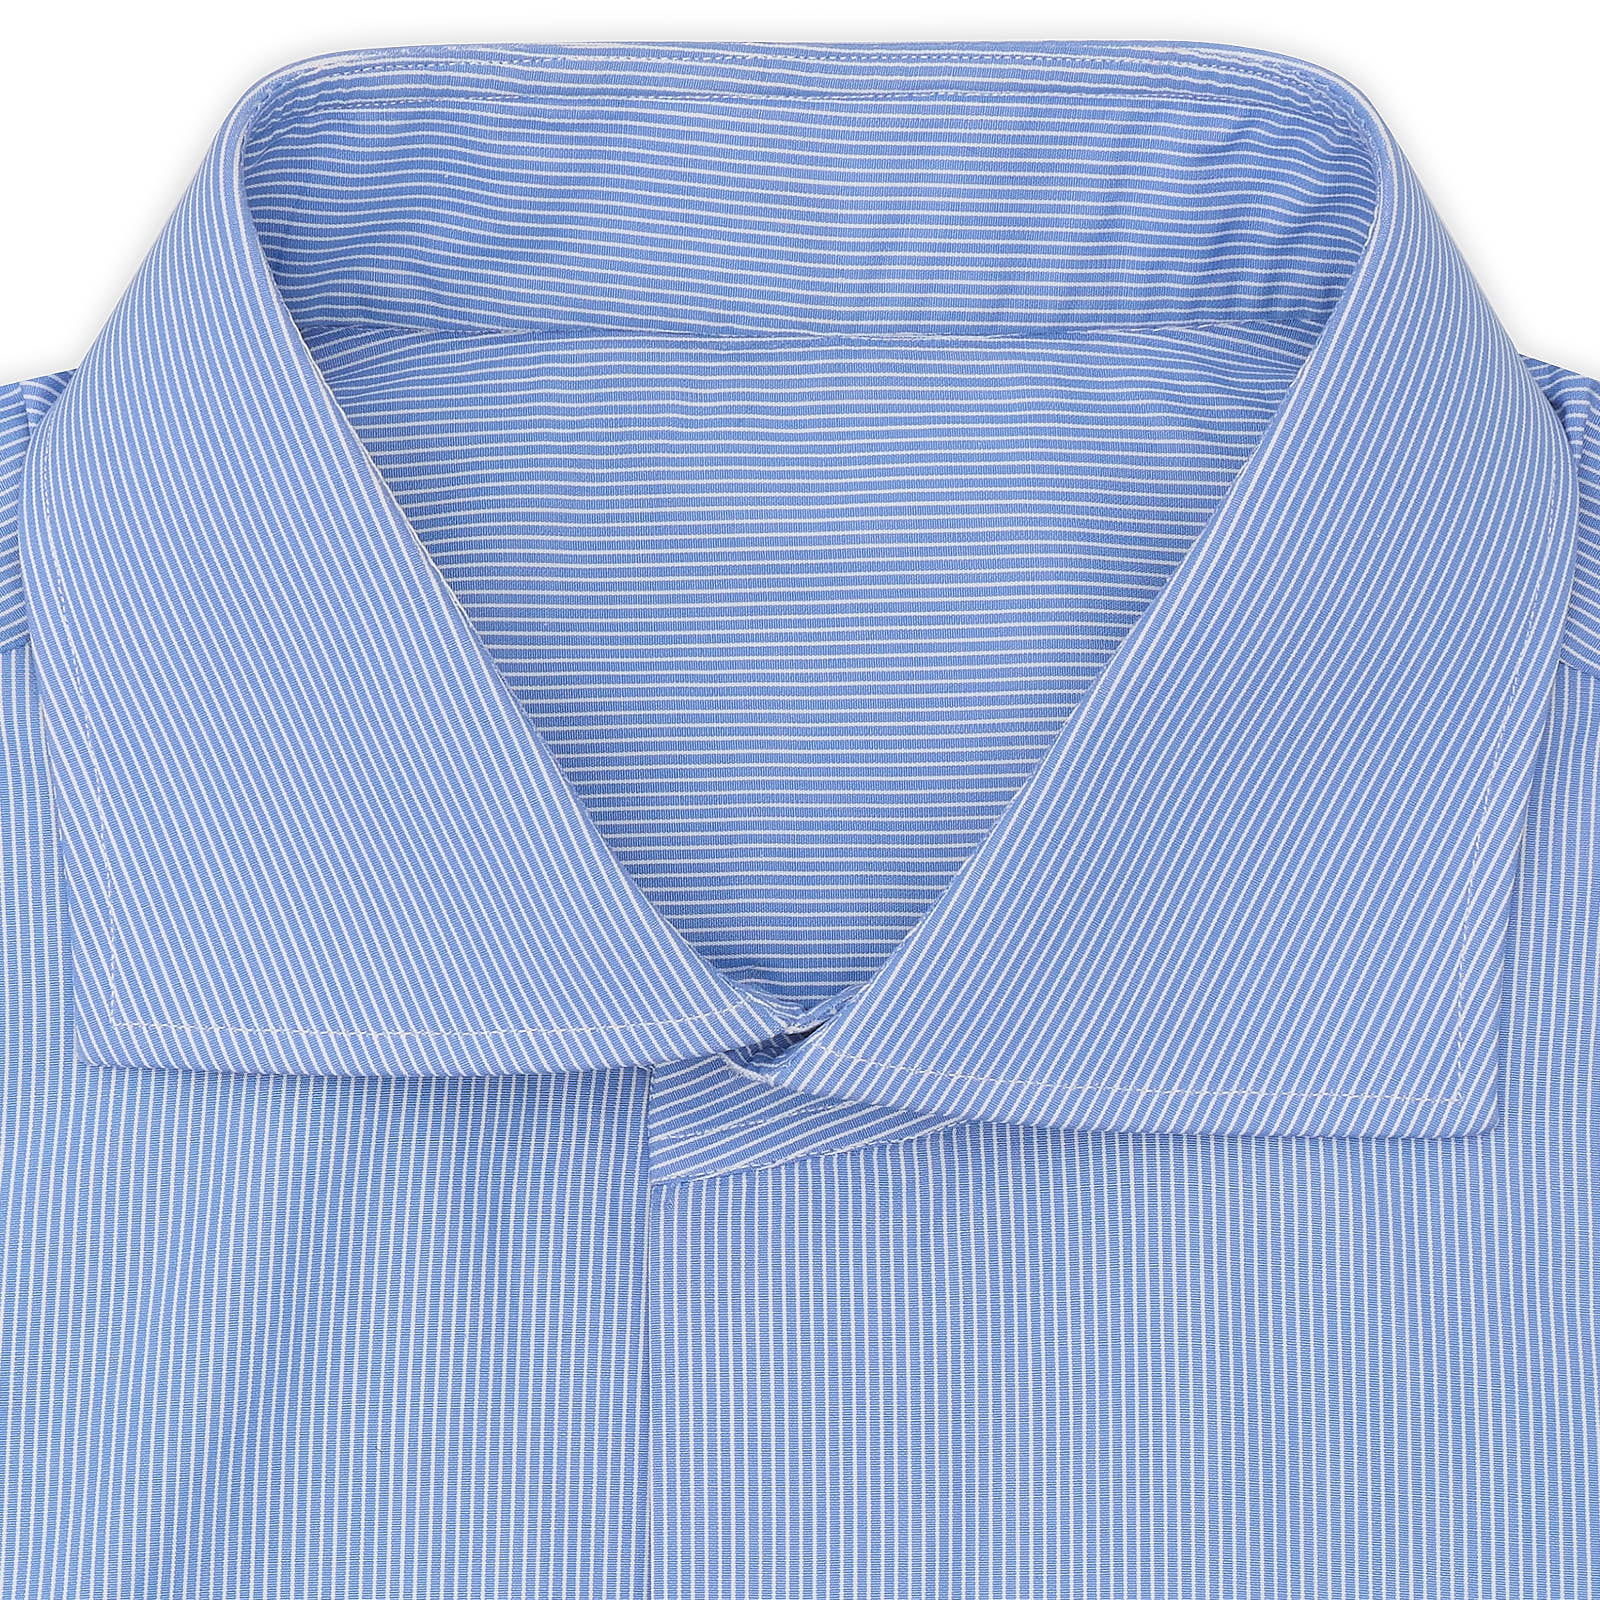 BESPOKE ATHENS Handmade Blue Striped Cotton Poplin Dress Shirt EU 45 NEW US 18